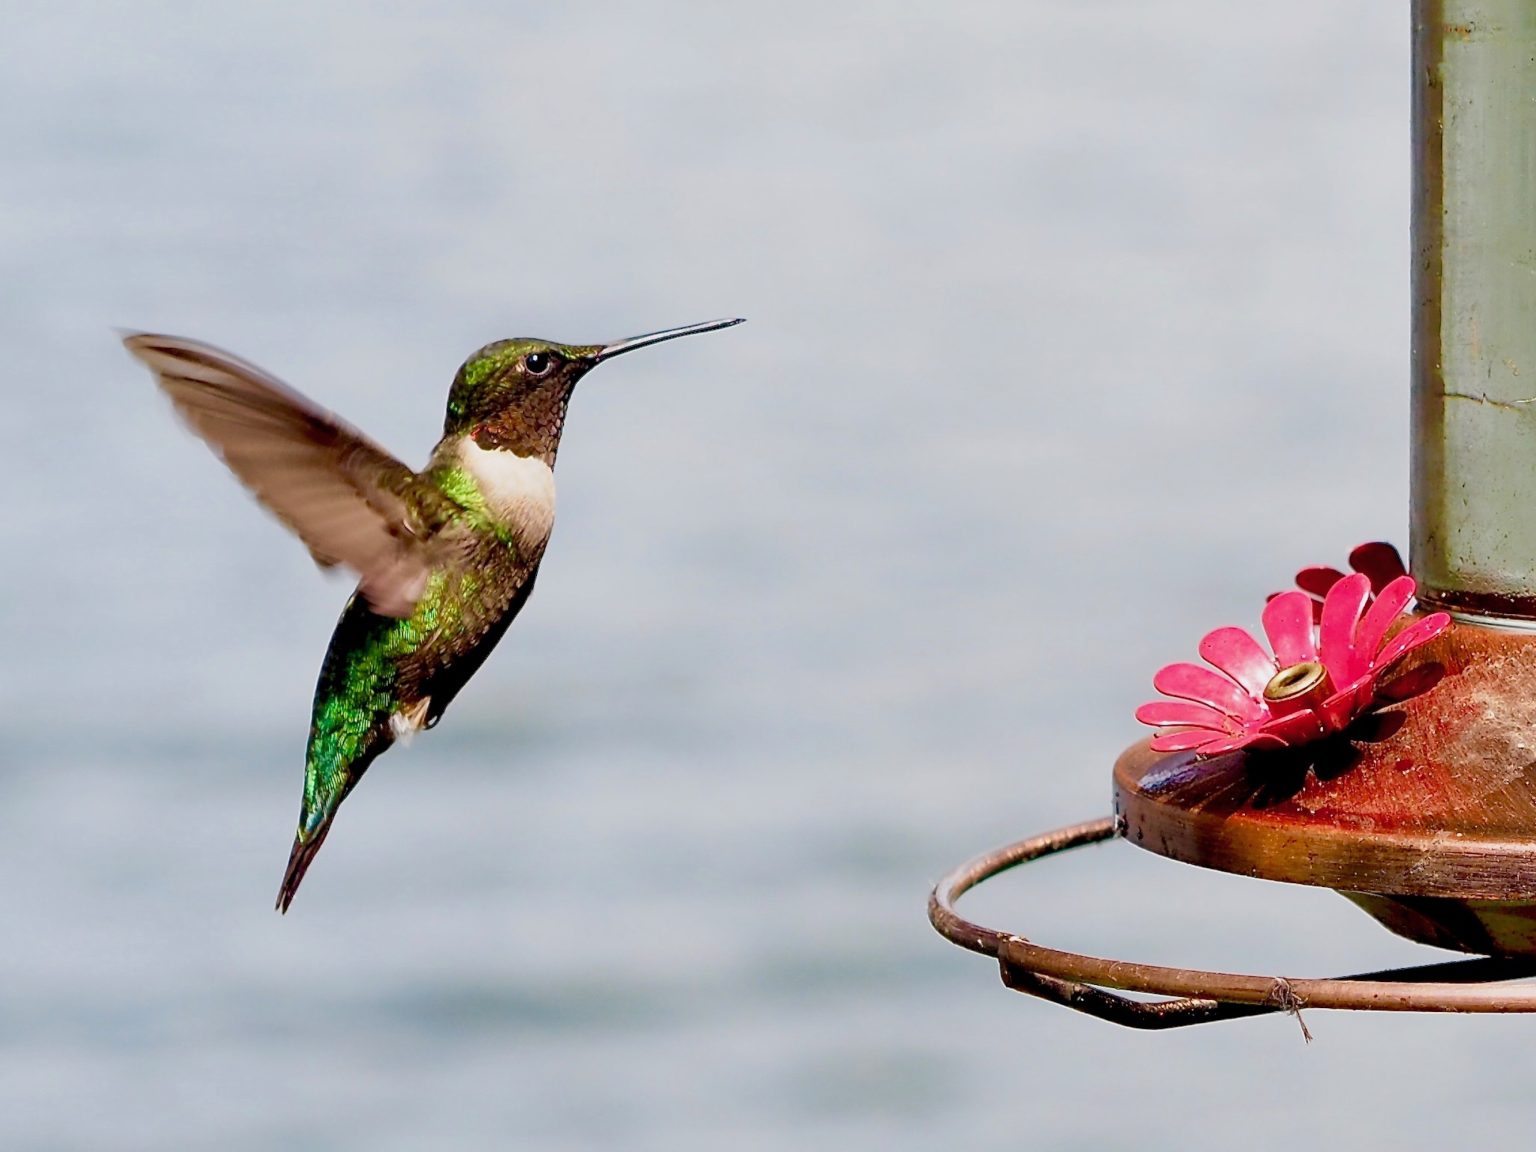 A hummingbird flying approaching a feeder.